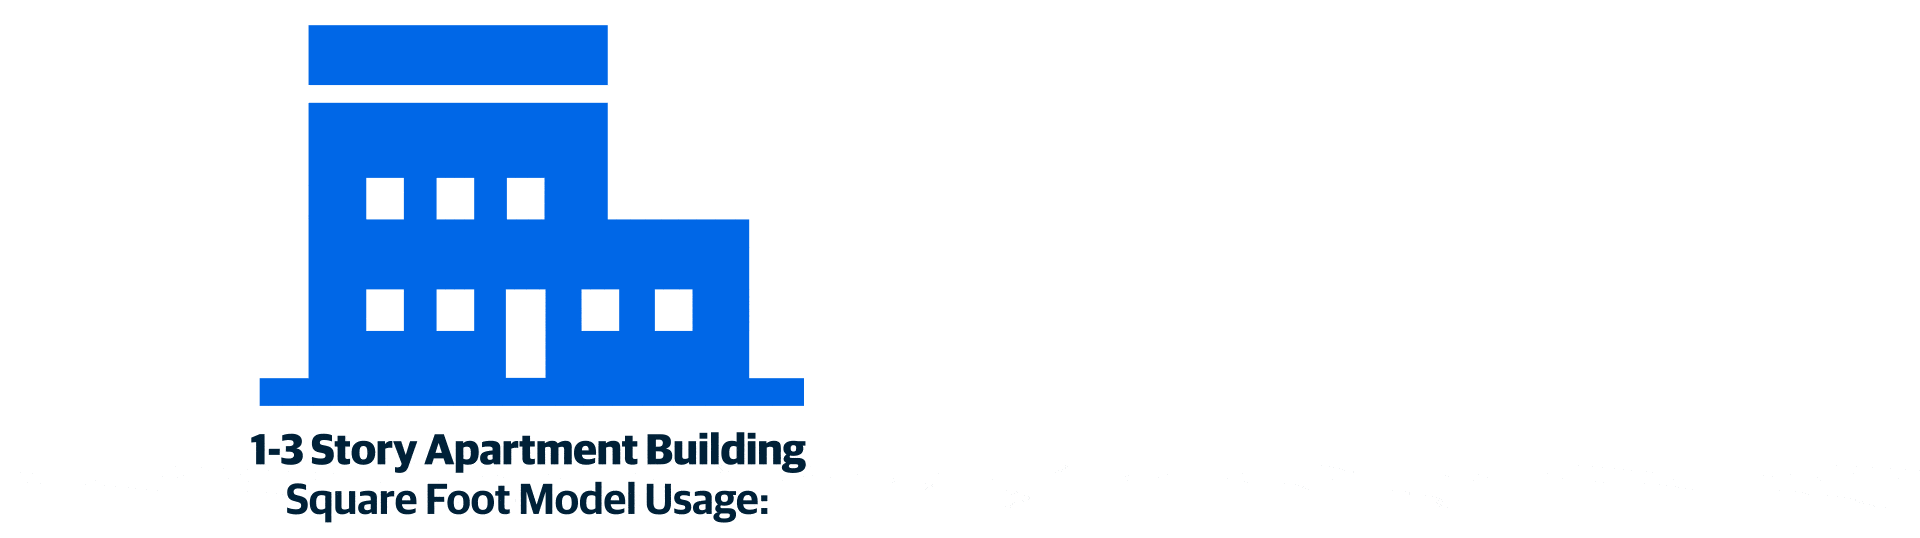 Building Graphic